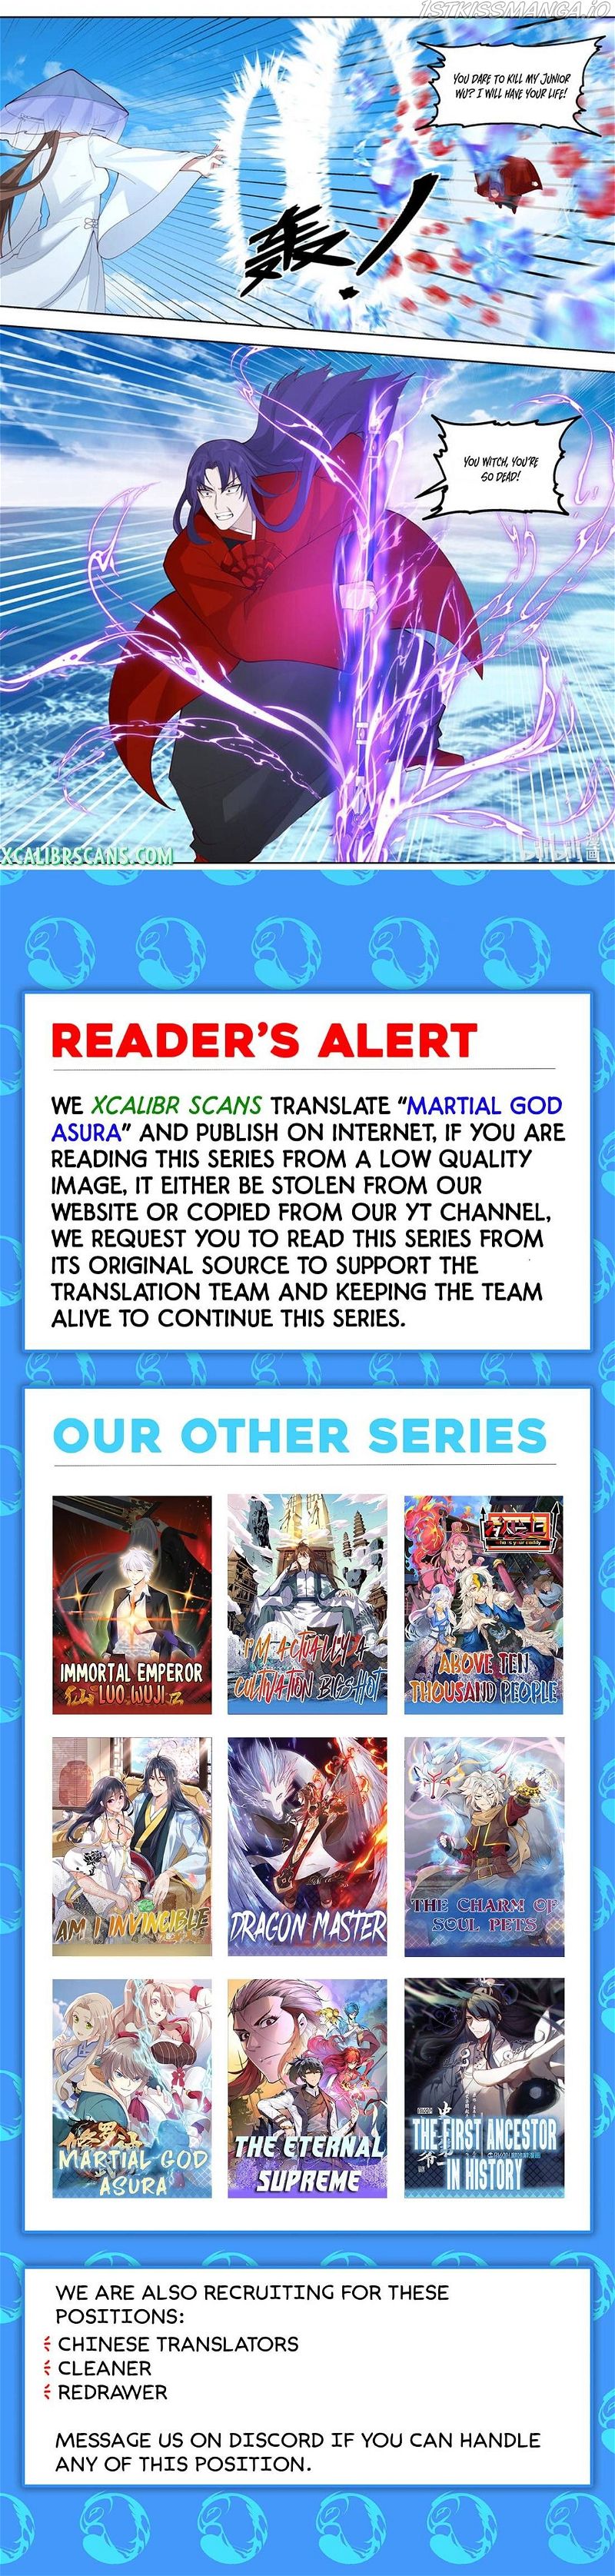 Martial God Asura Chapter 614 page 10